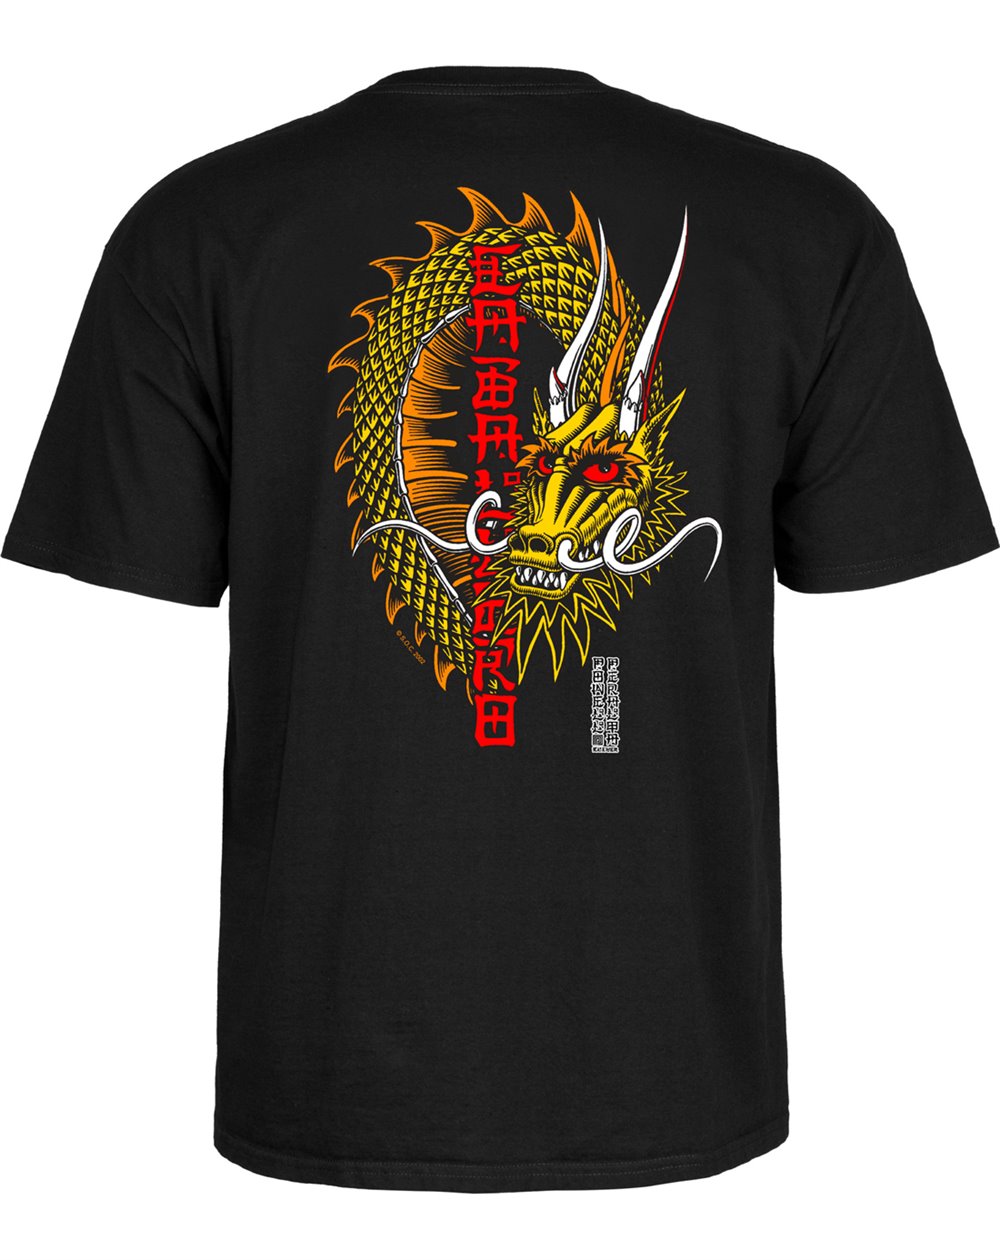 Powell Peralta Men's T-Shirt Steve Caballero Ban This Dragon Black